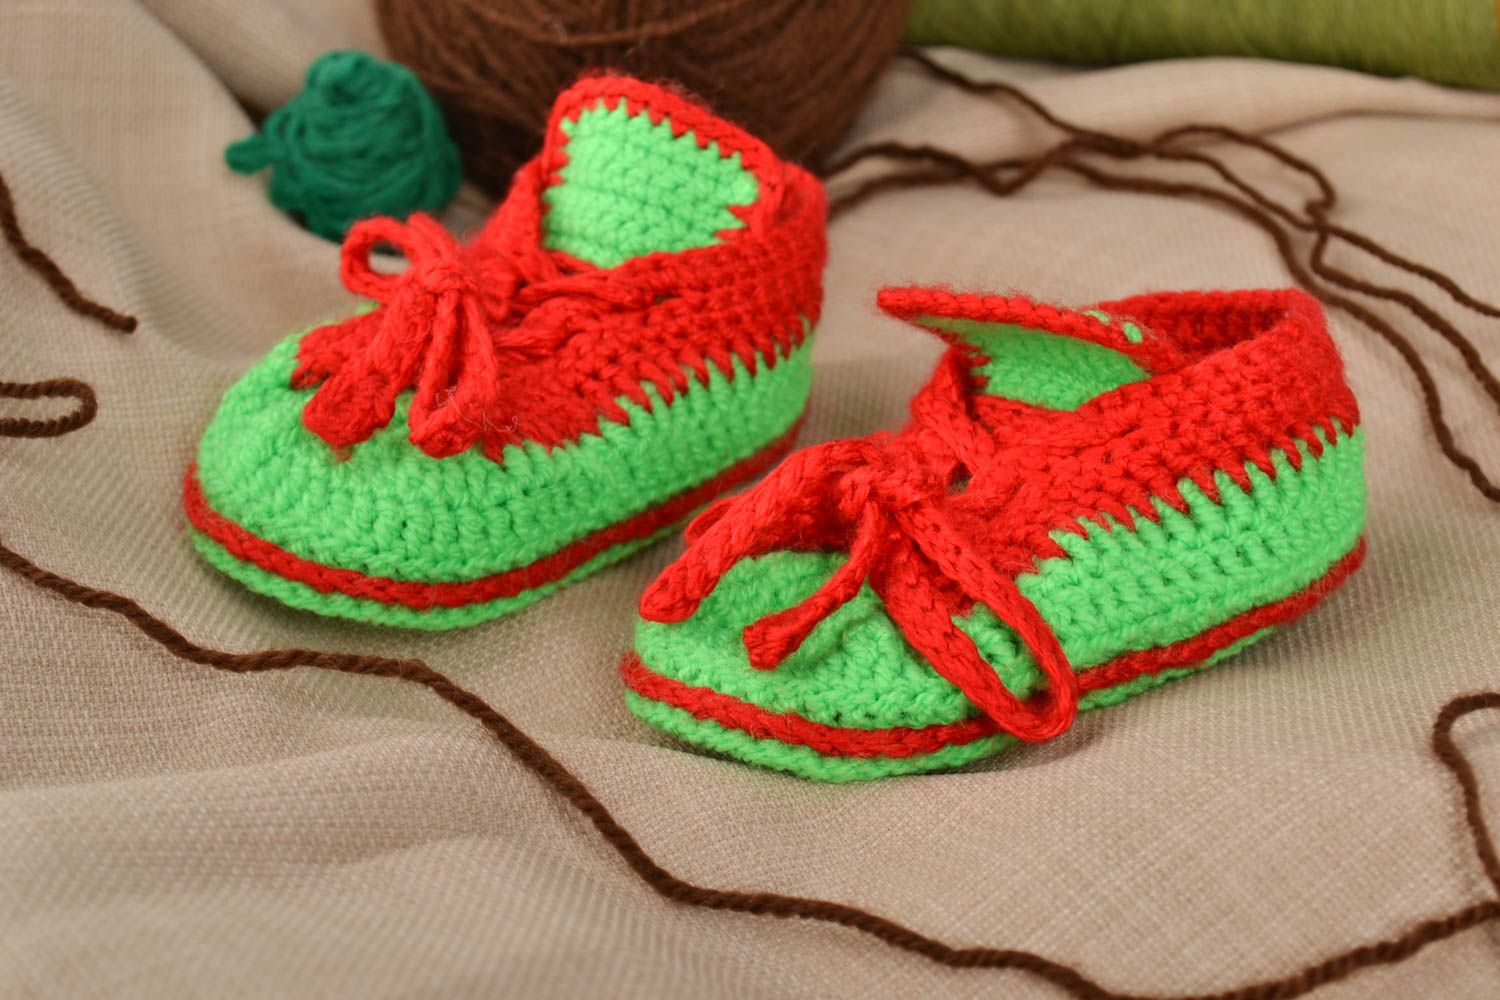 Handmade crochet baby booties crochet ideas cute baby outfits gift ideas photo 1